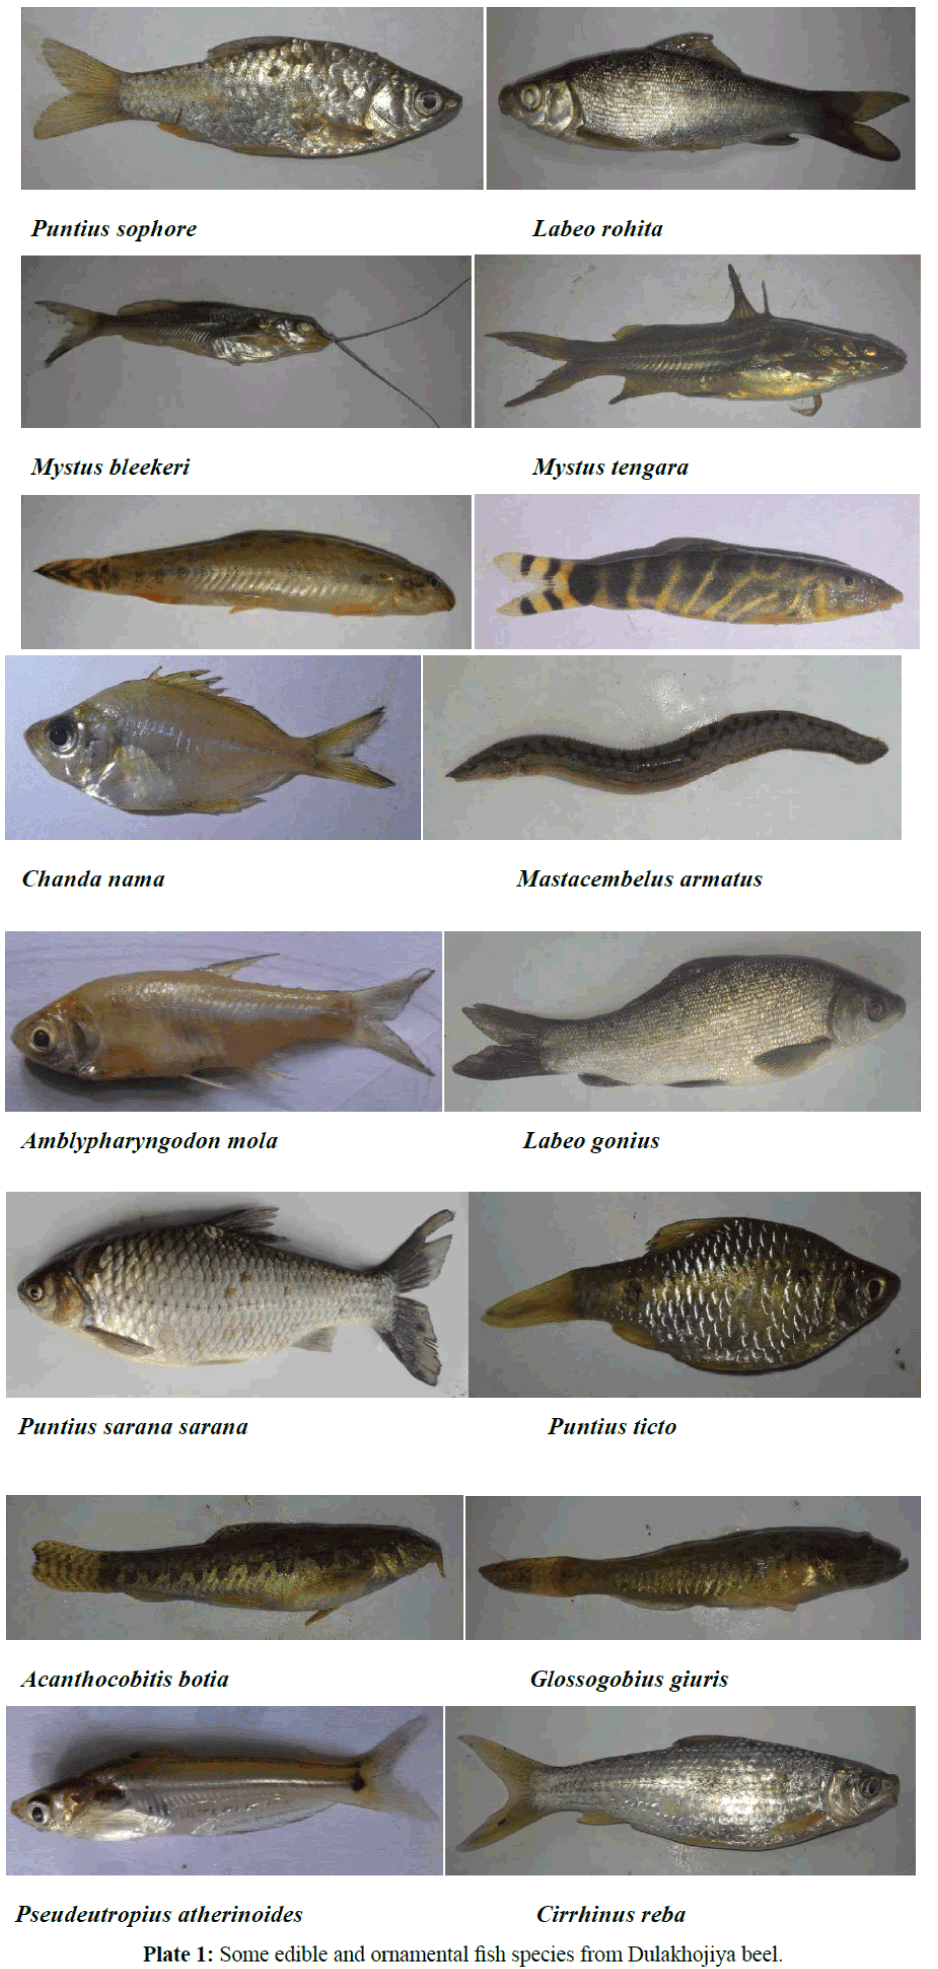 fisheriessciences-Dulakhojiya-beel